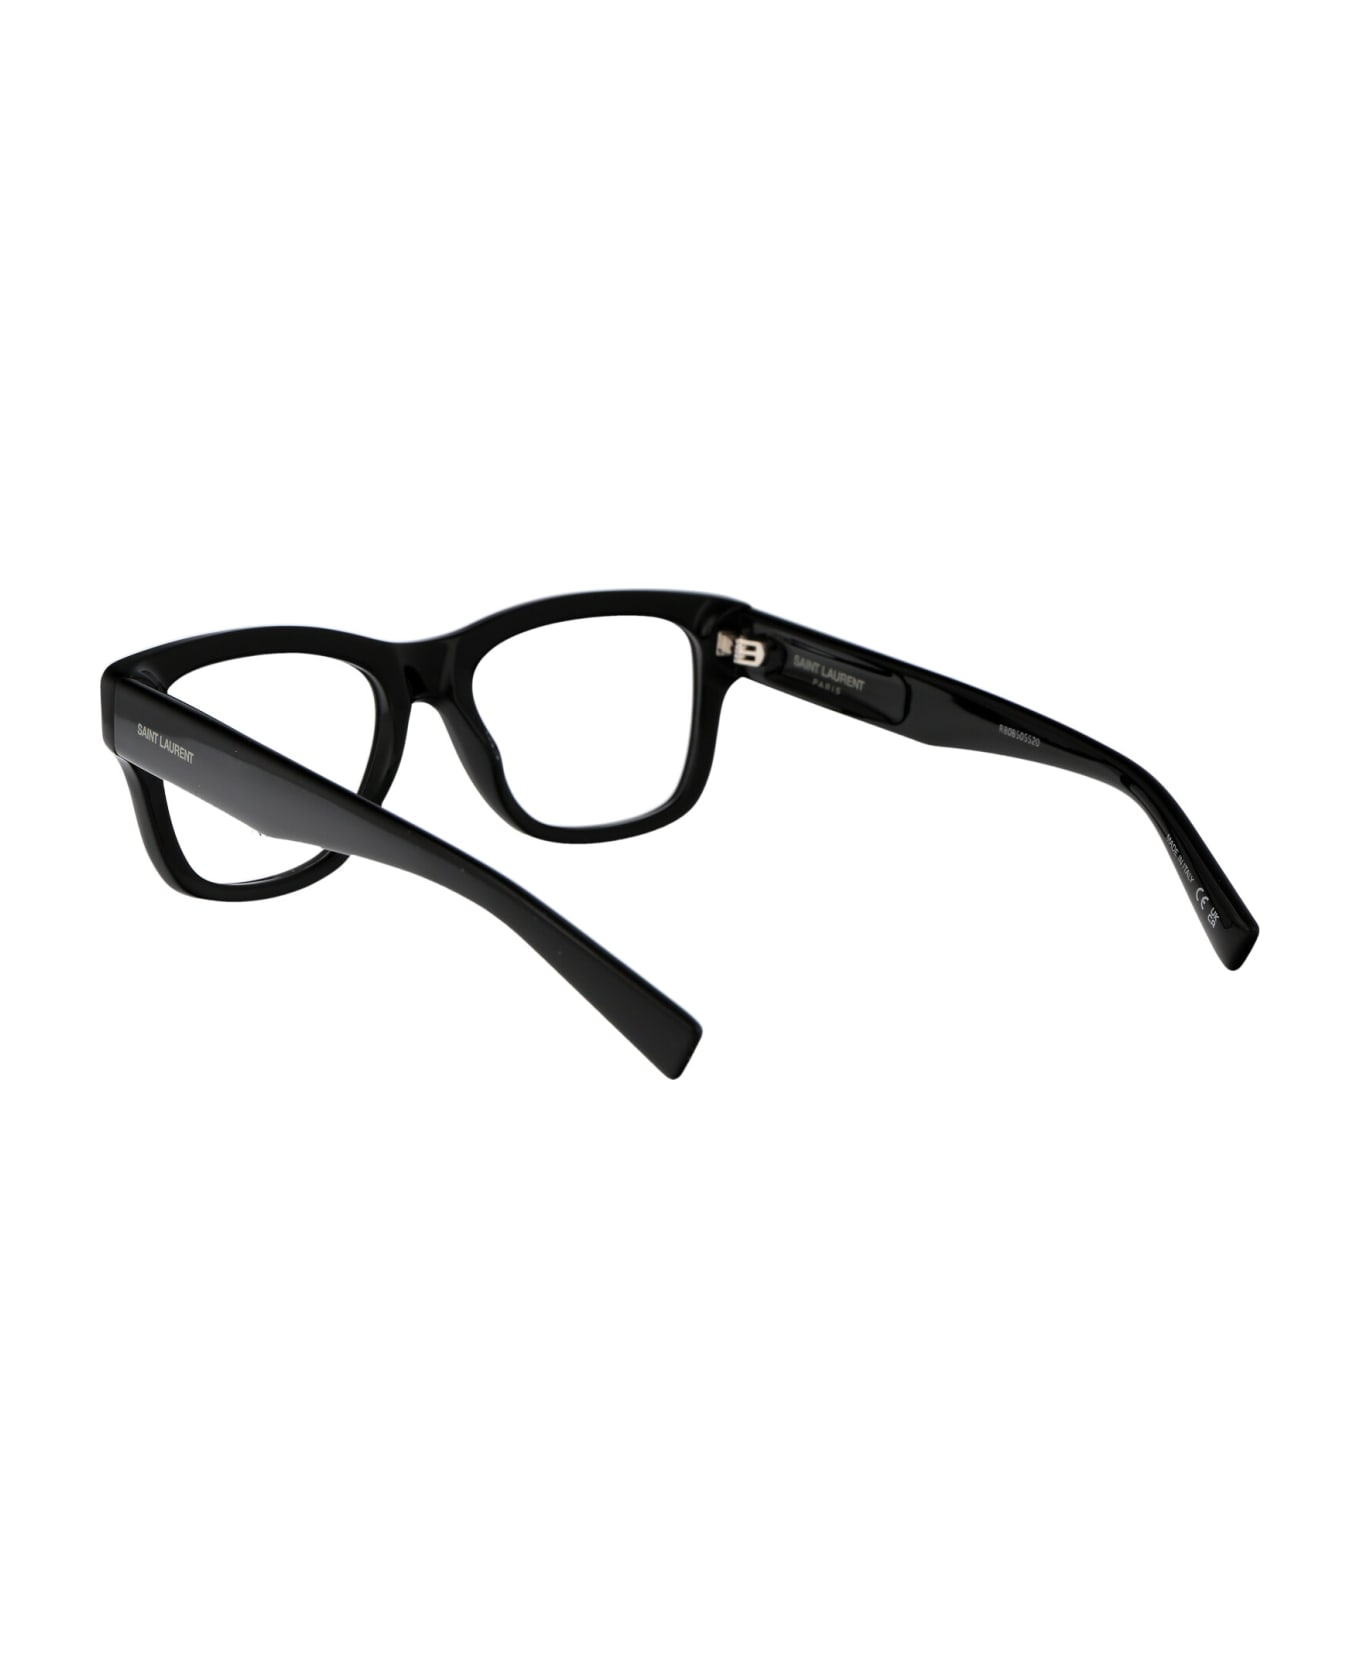 Saint Laurent Eyewear Sl 677 Glasses - 001 BLACK BLACK TRANSPARENT アイウェア